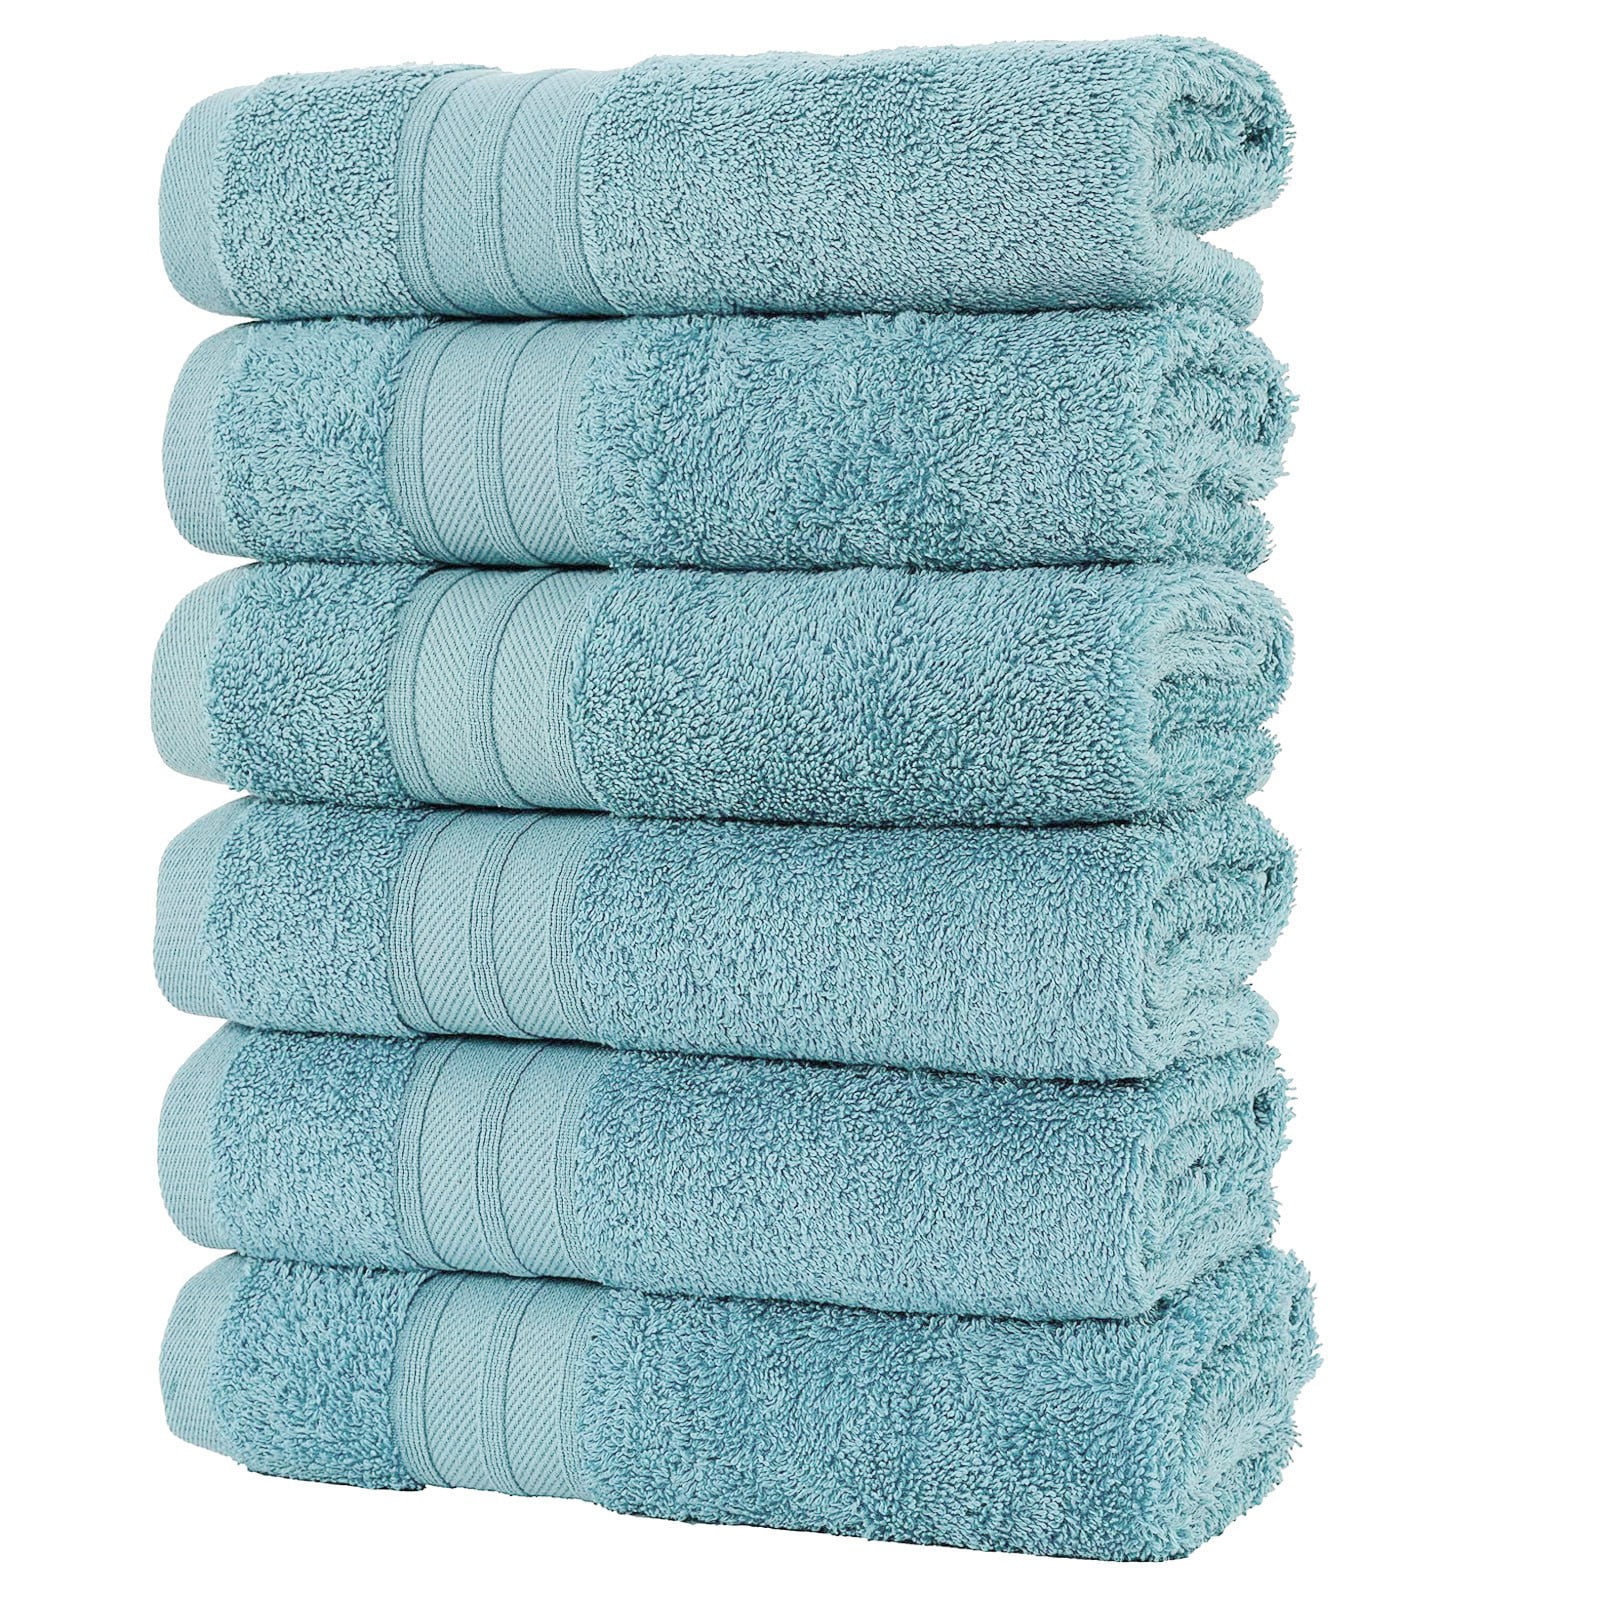 Details about   100% Egyptian Cotton Towel Set Silver Bath Sheet Hand Towels Large Bathroom Bale 